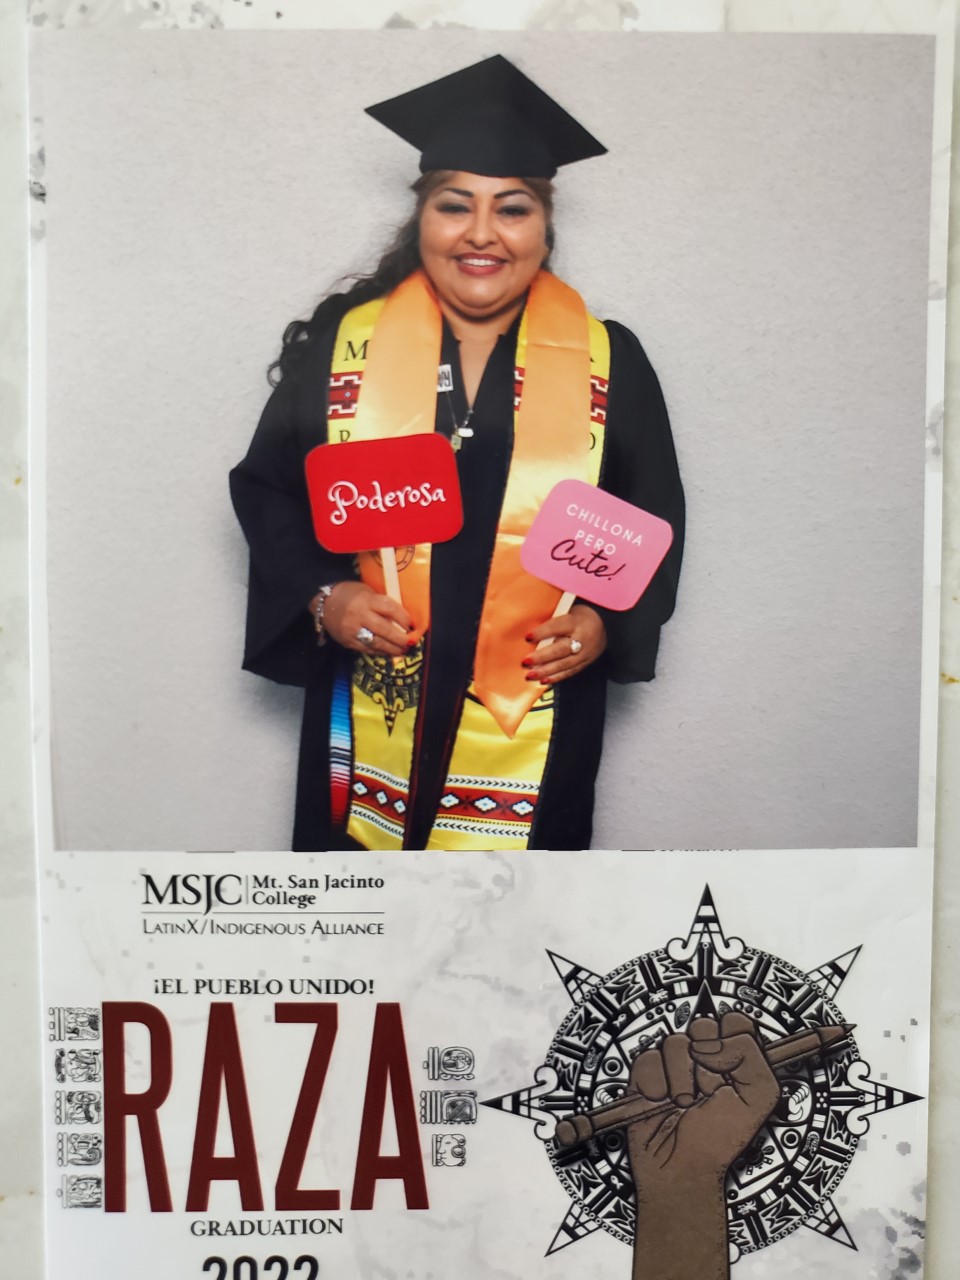 Grad Story: Leticia Ramirez Perseveres to Soar Higher